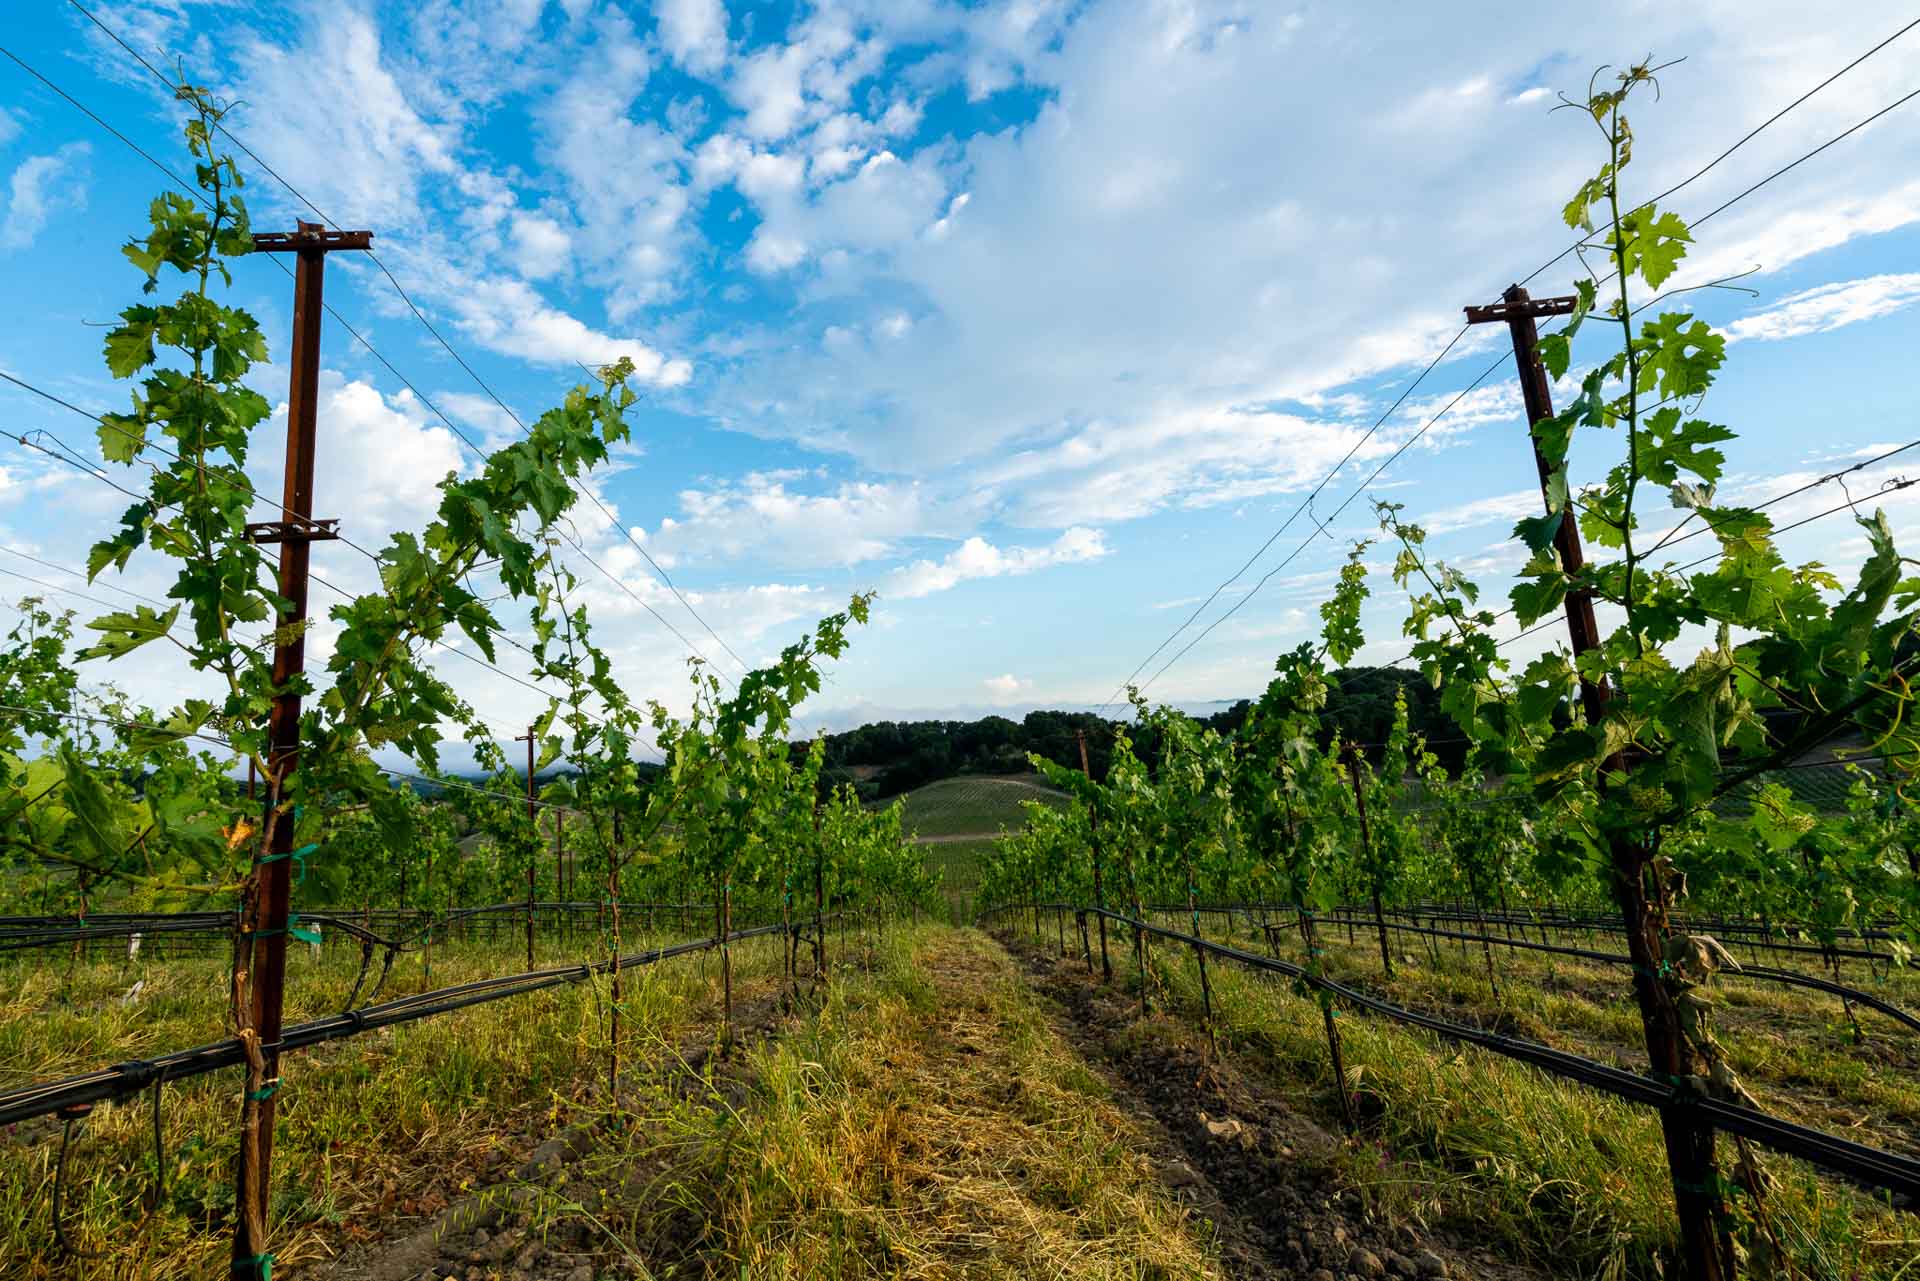 A vineyard row in the springtime at Moonsprings Vineyard in Templeton, CA